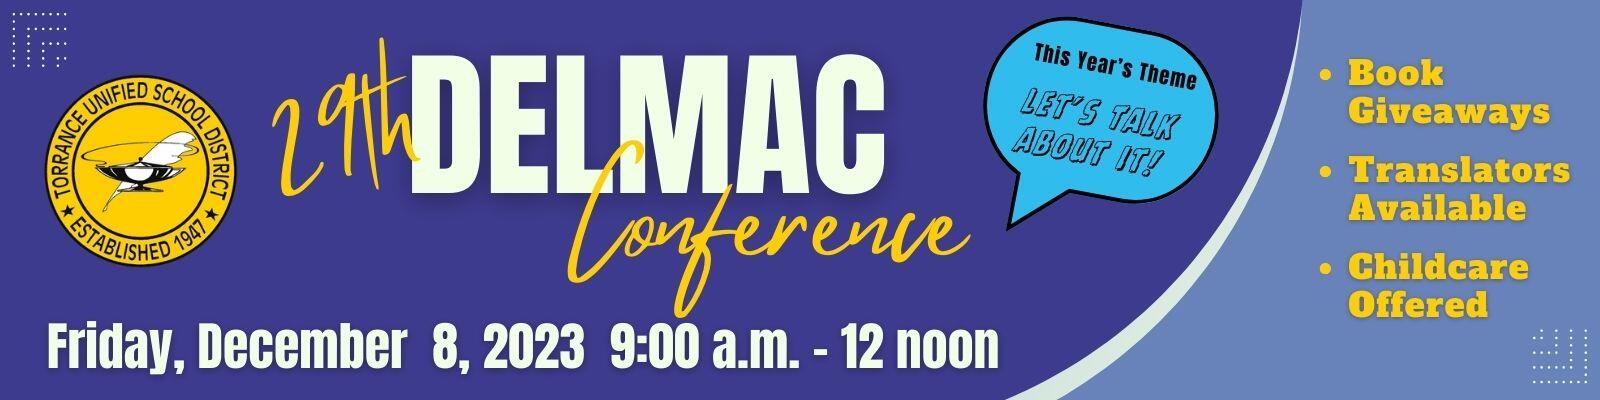 29th DELMAC Conference Banner